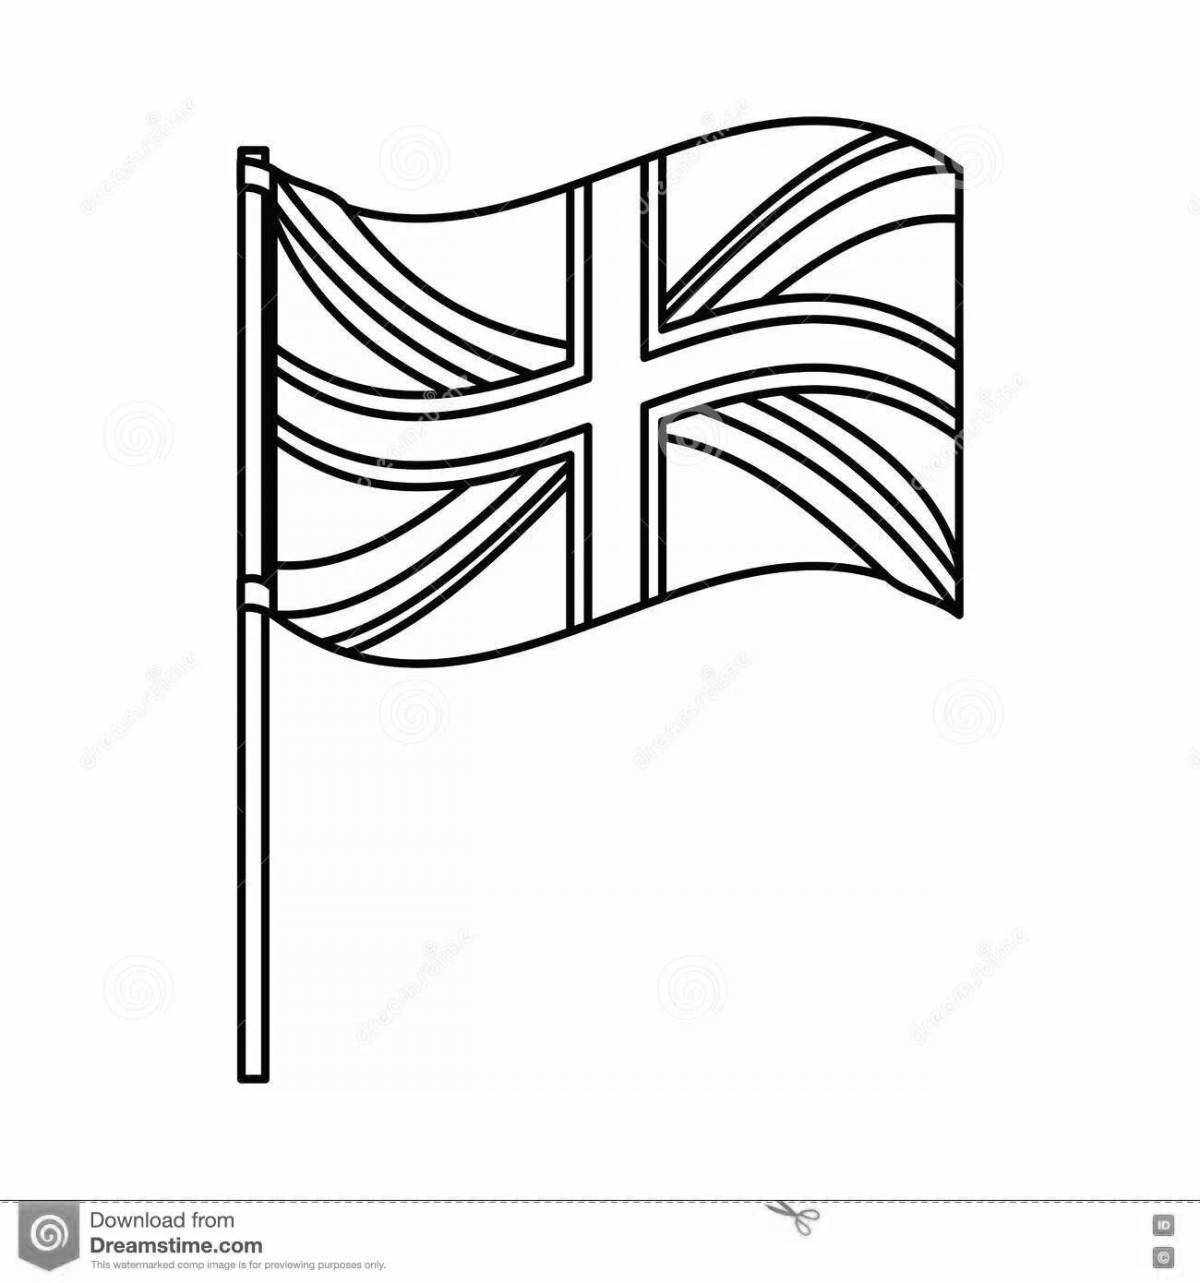 Impressive coloring of the British flag